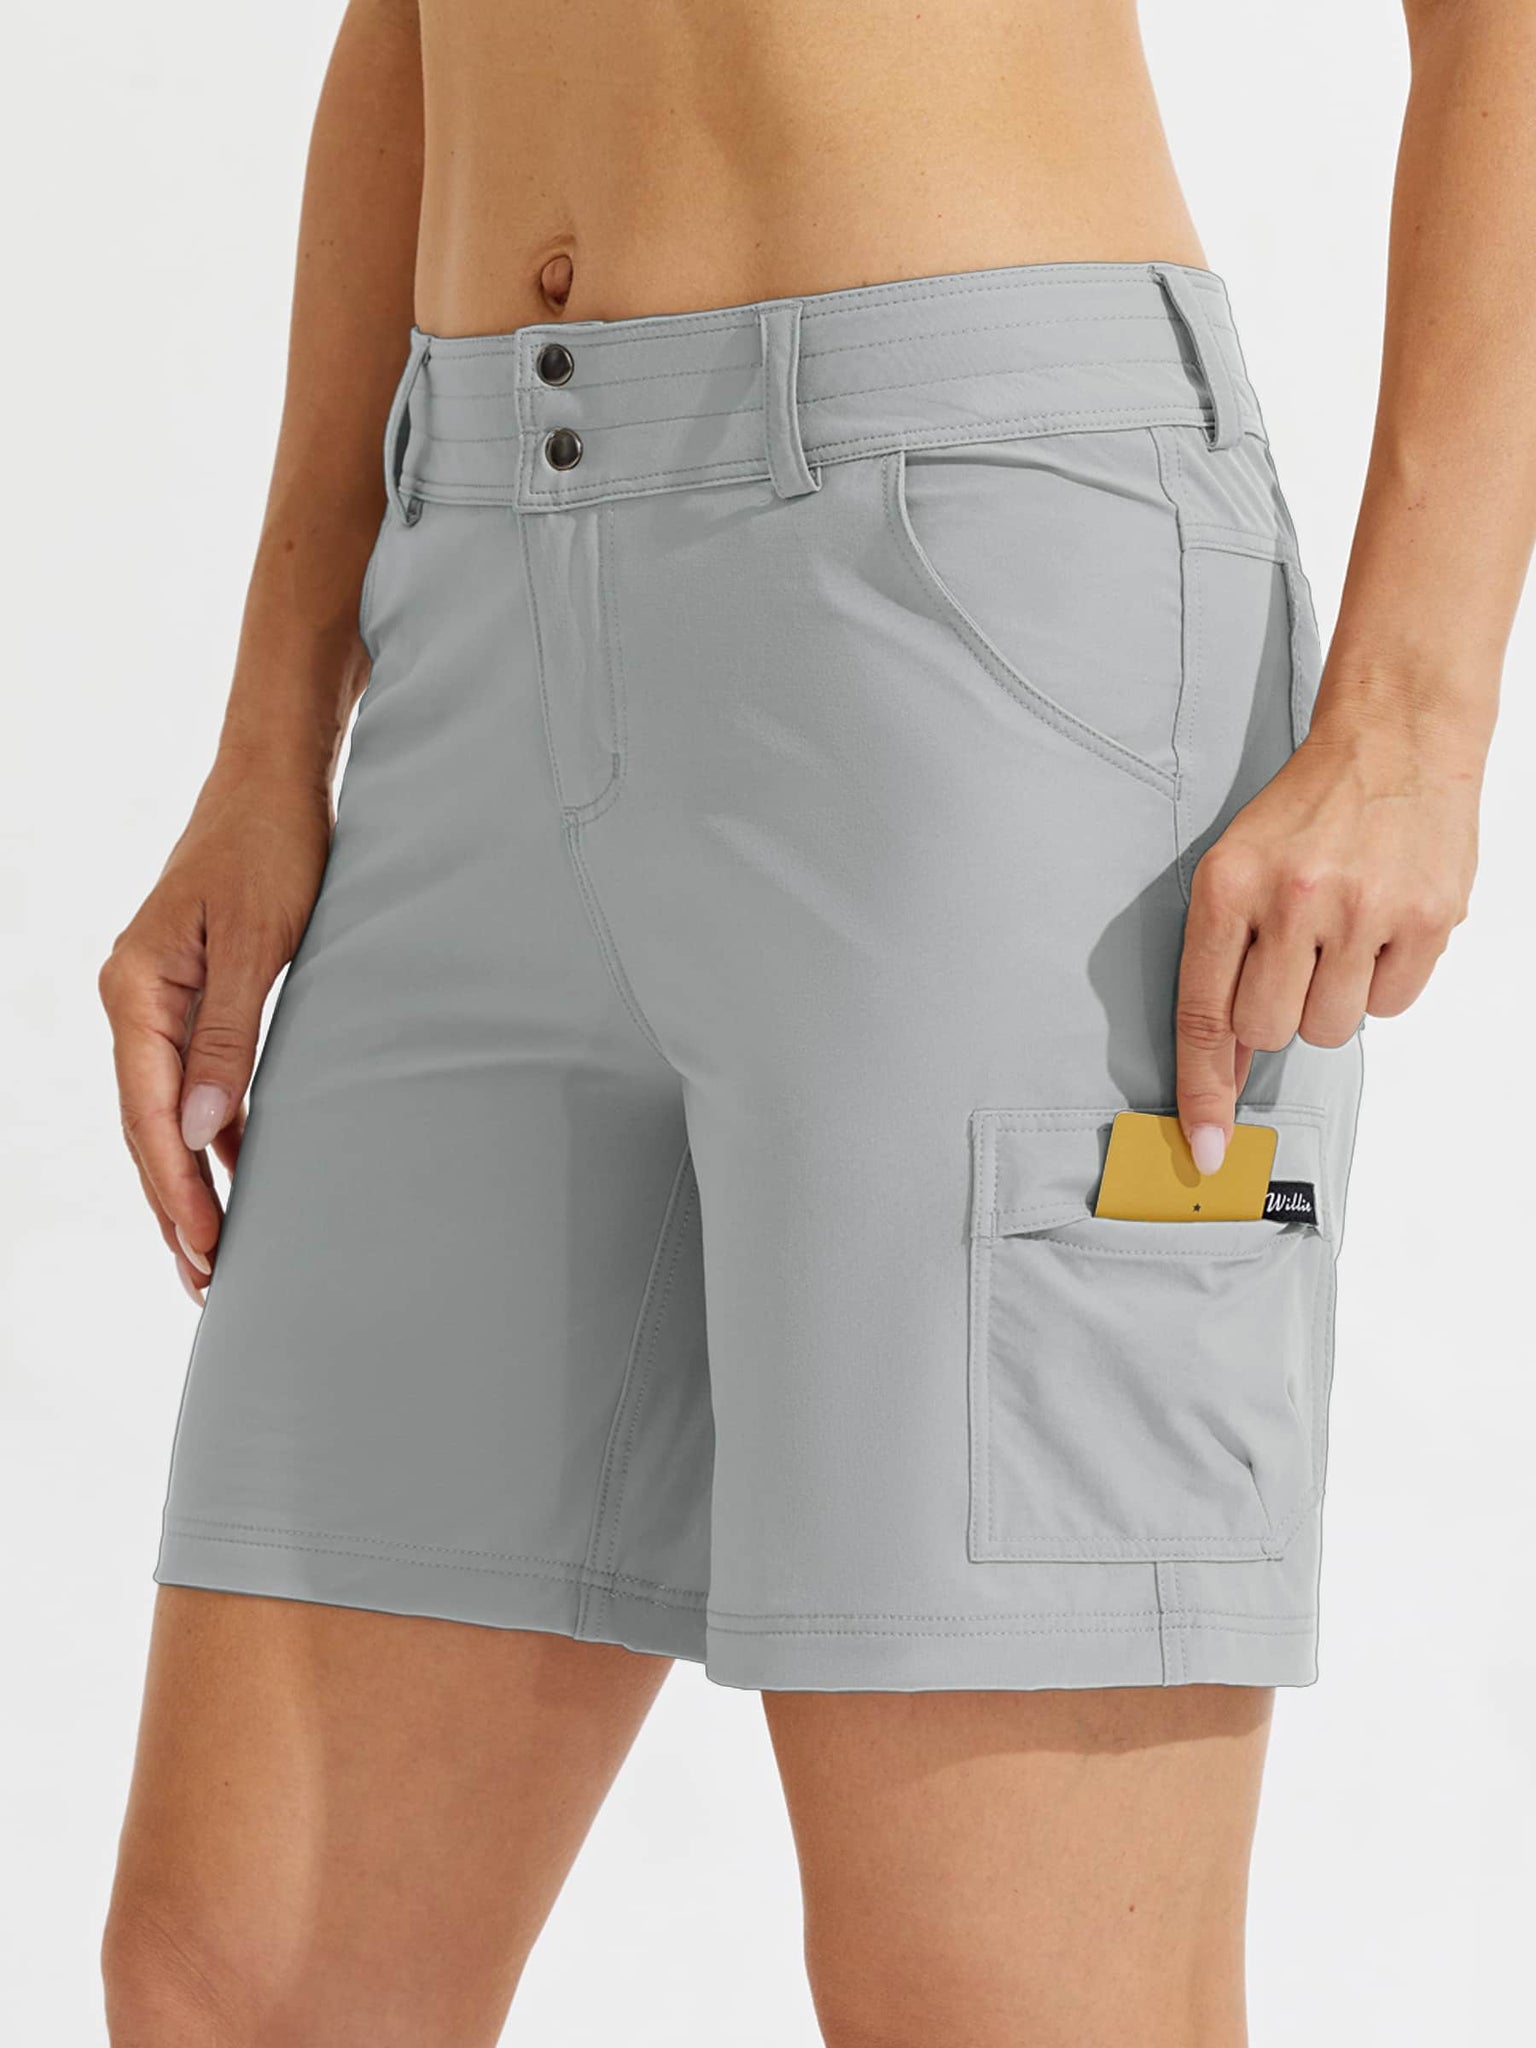 Women's Outdoor Pro Shorts Gray_model3